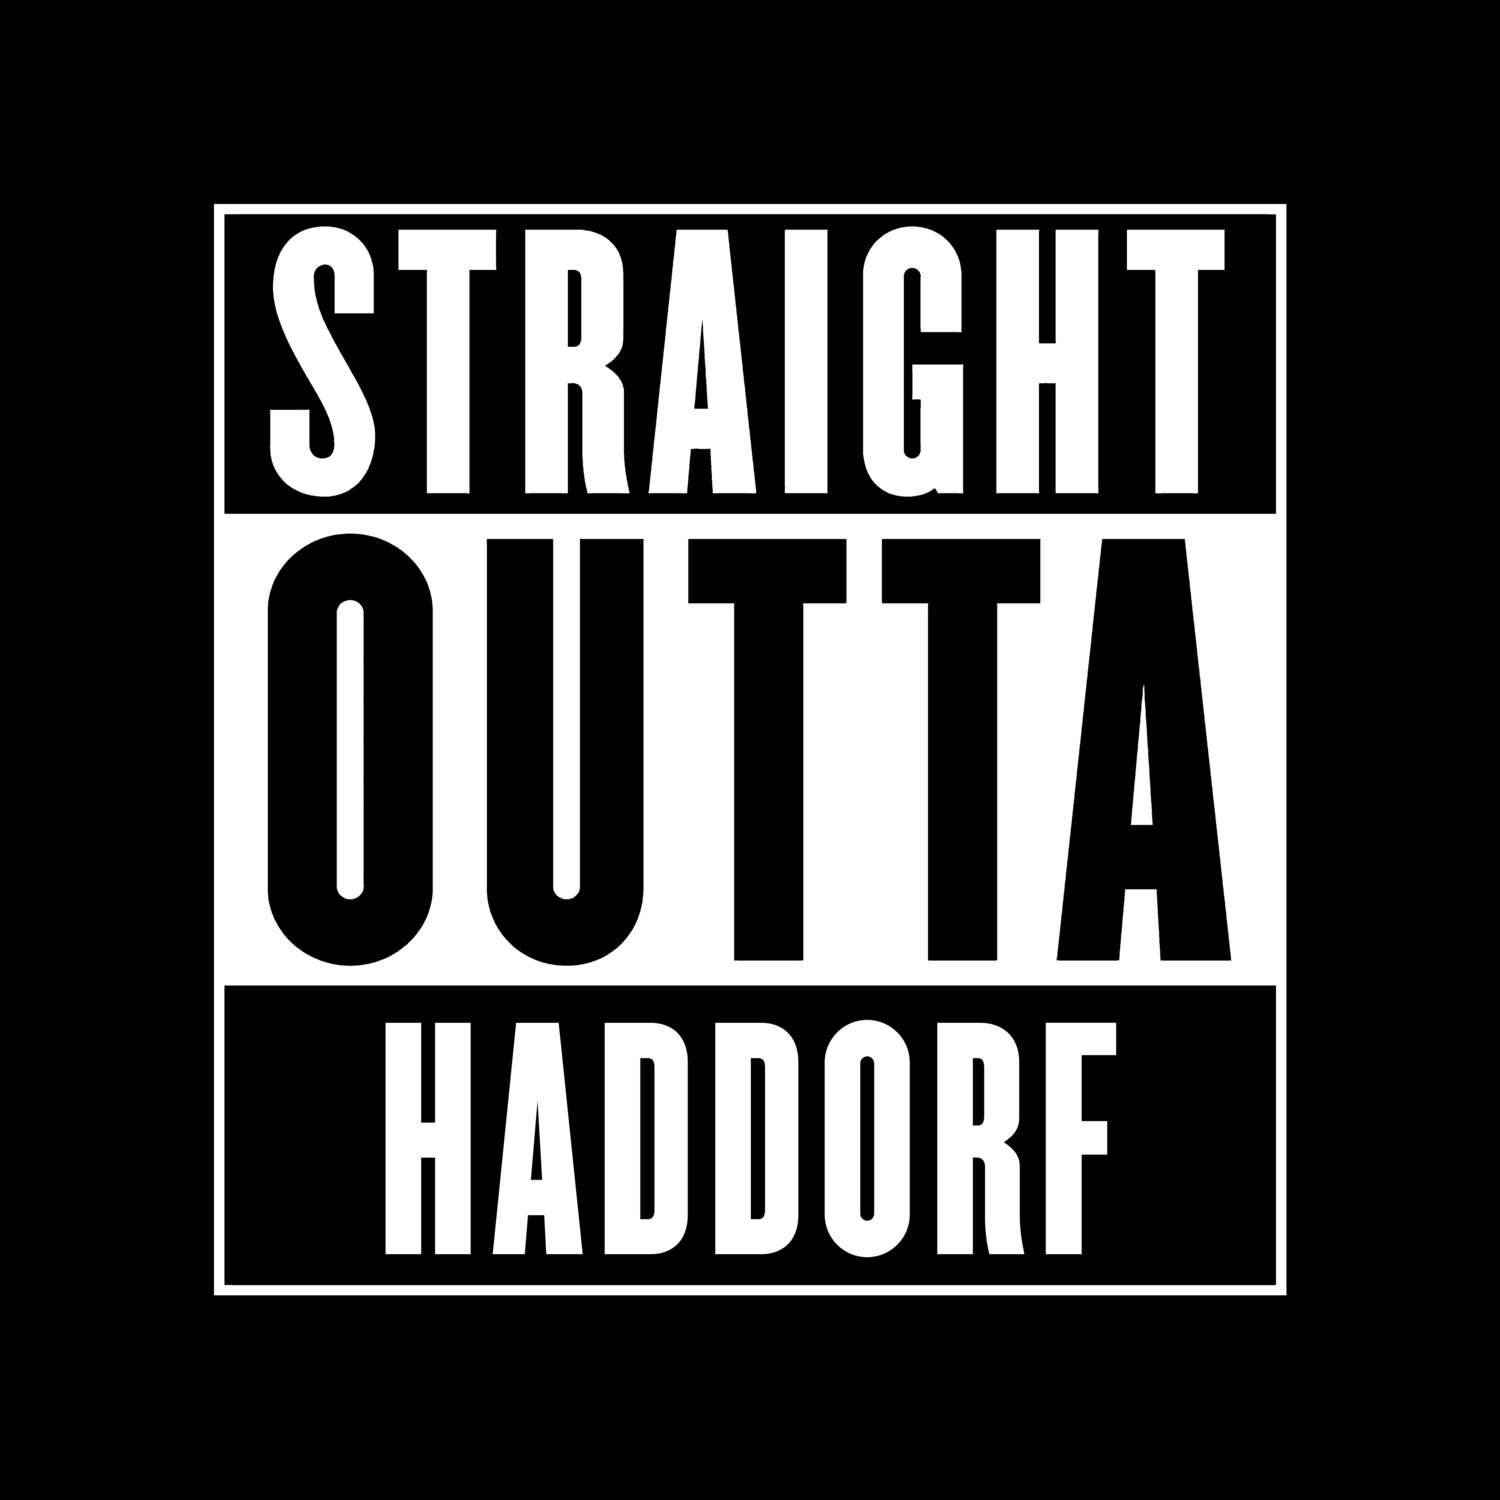 Haddorf T-Shirt »Straight Outta«